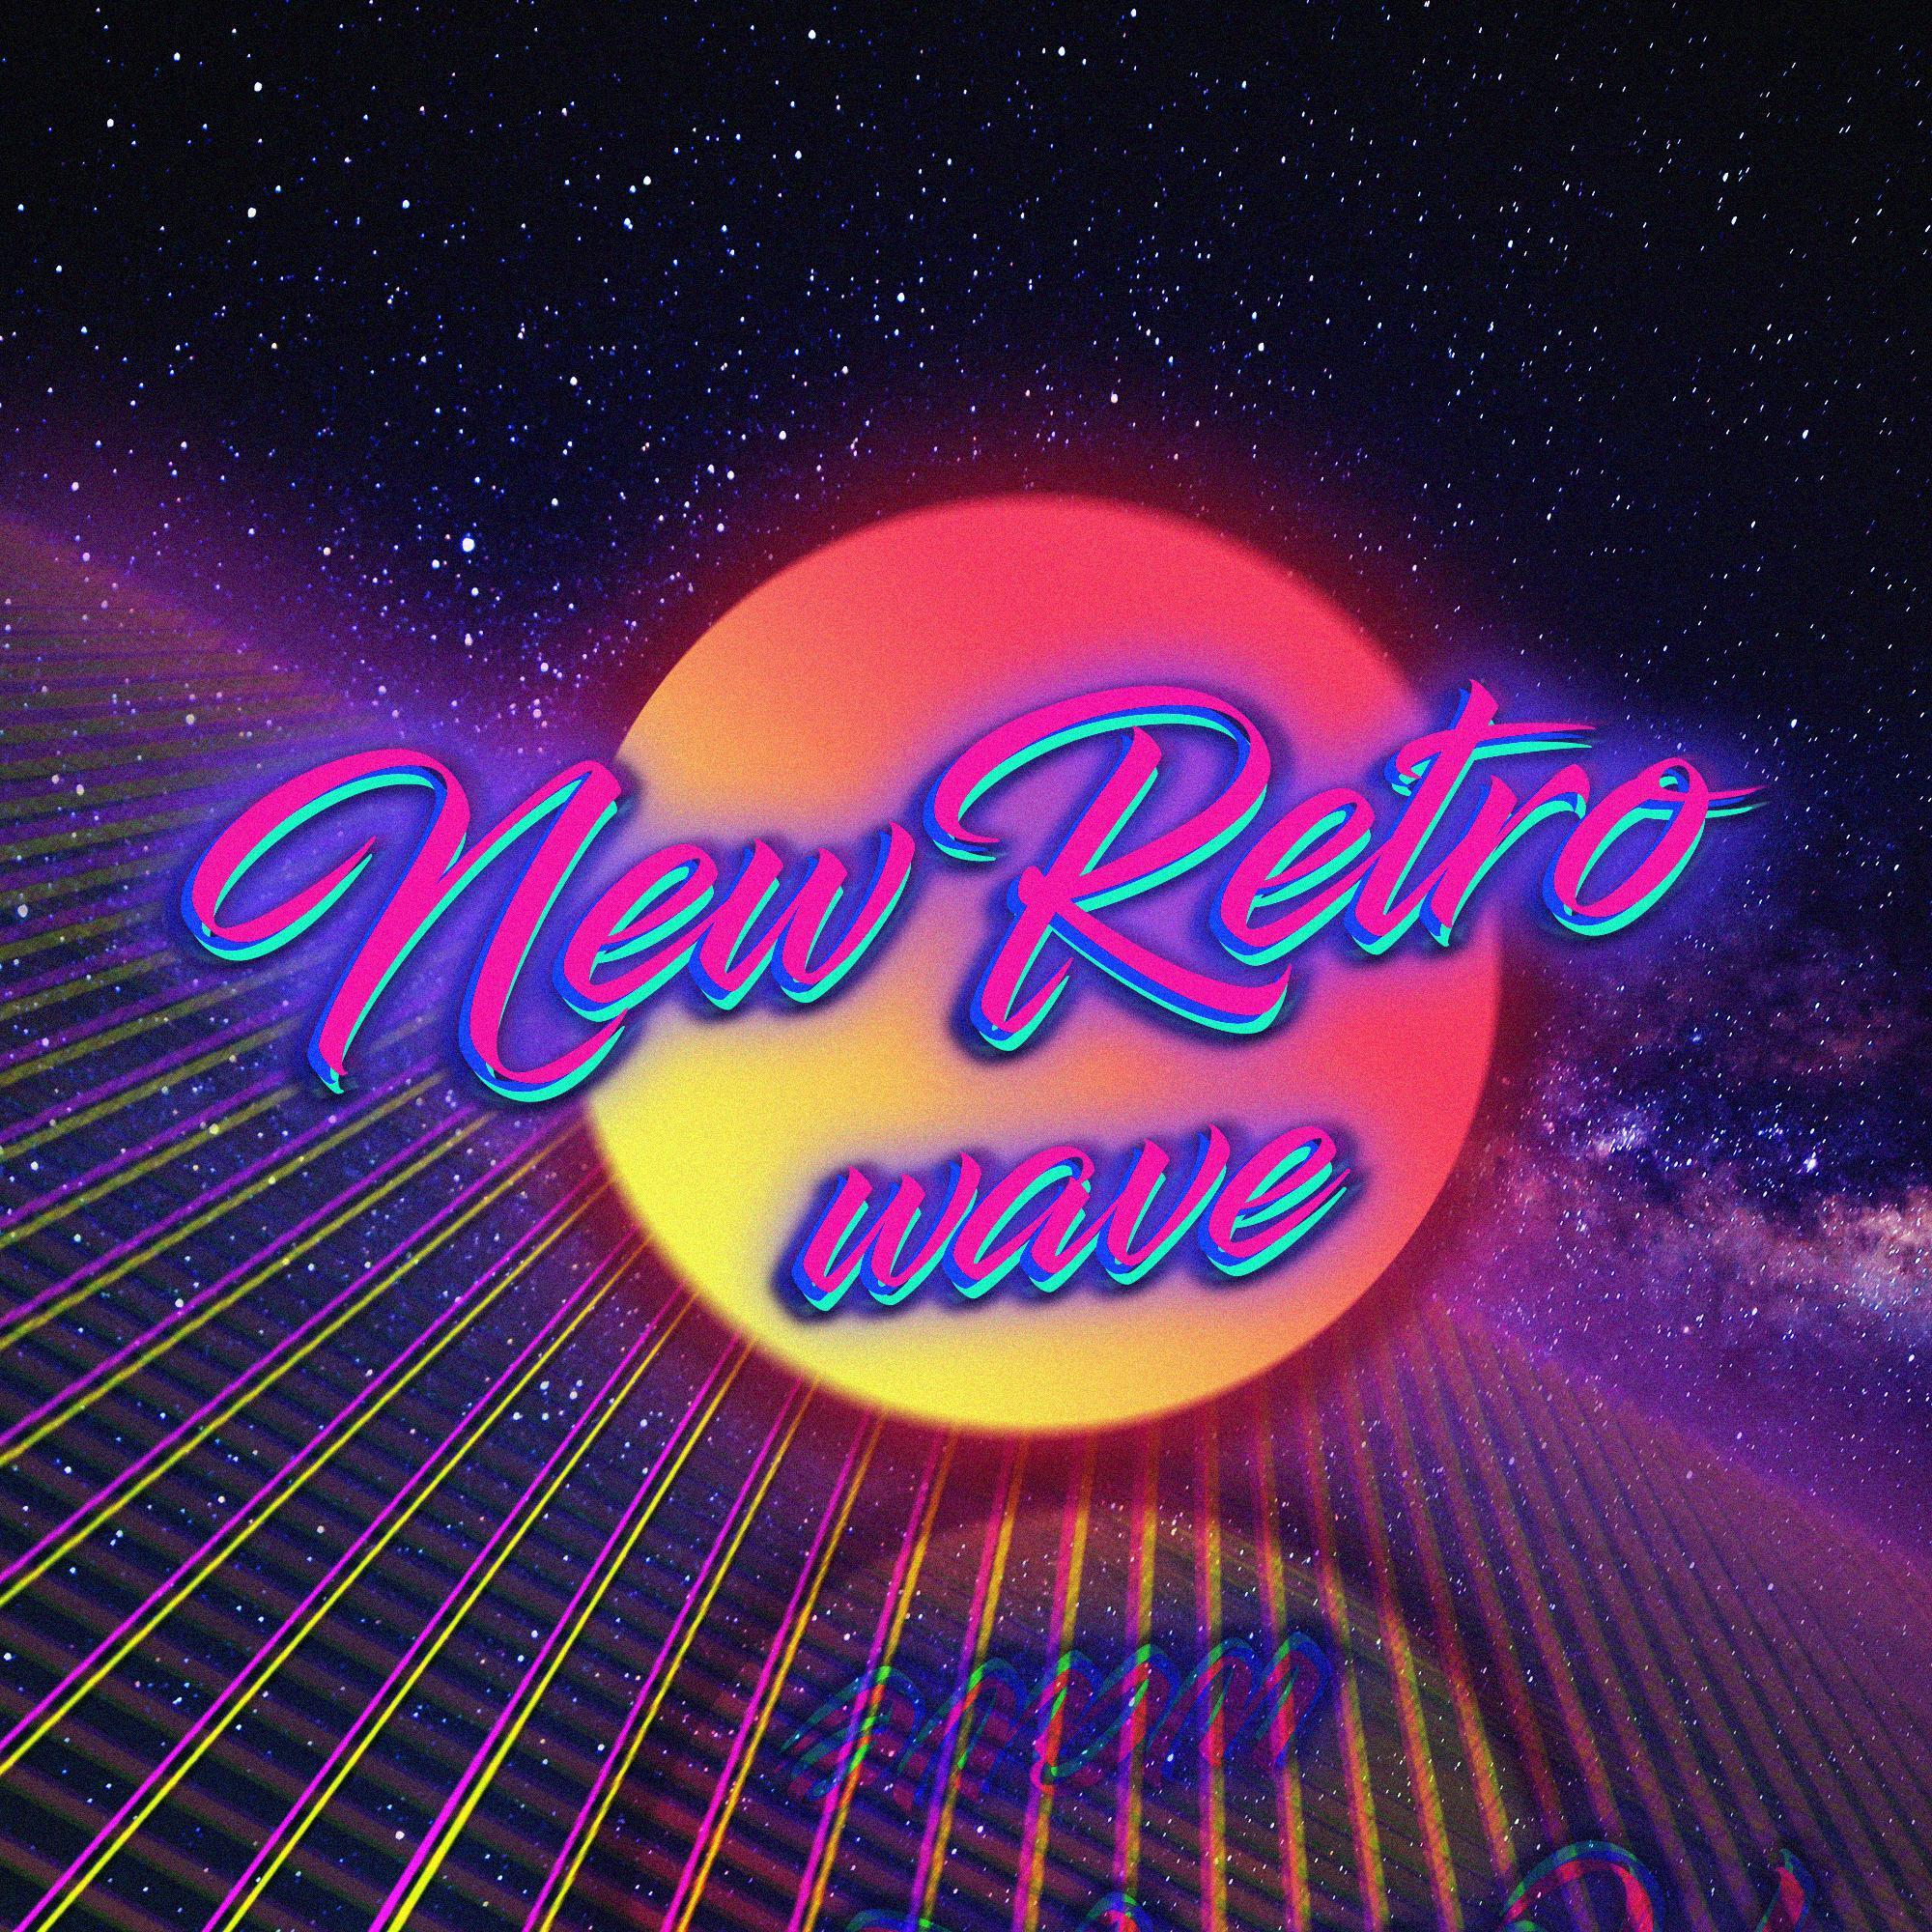 Retro style, New Retro Wave, 1980s, Digital art, Neon